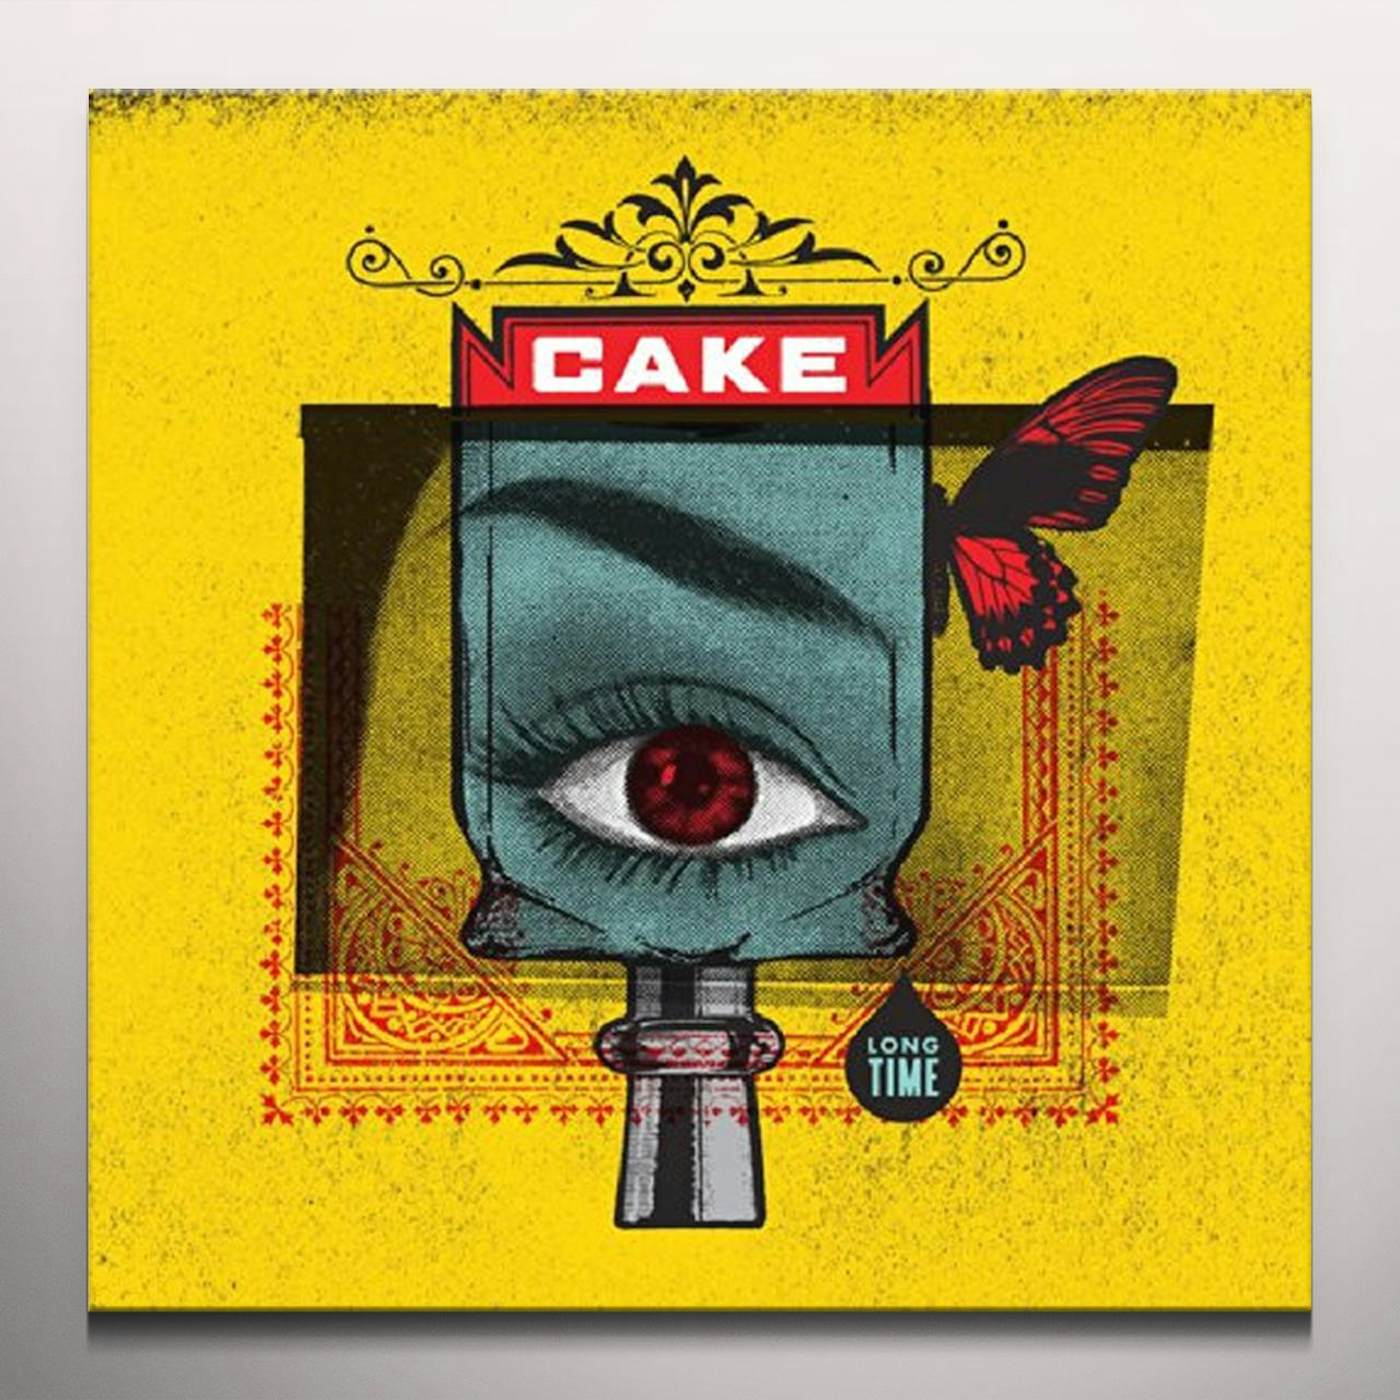 CAKE Long Time Vinyl Record